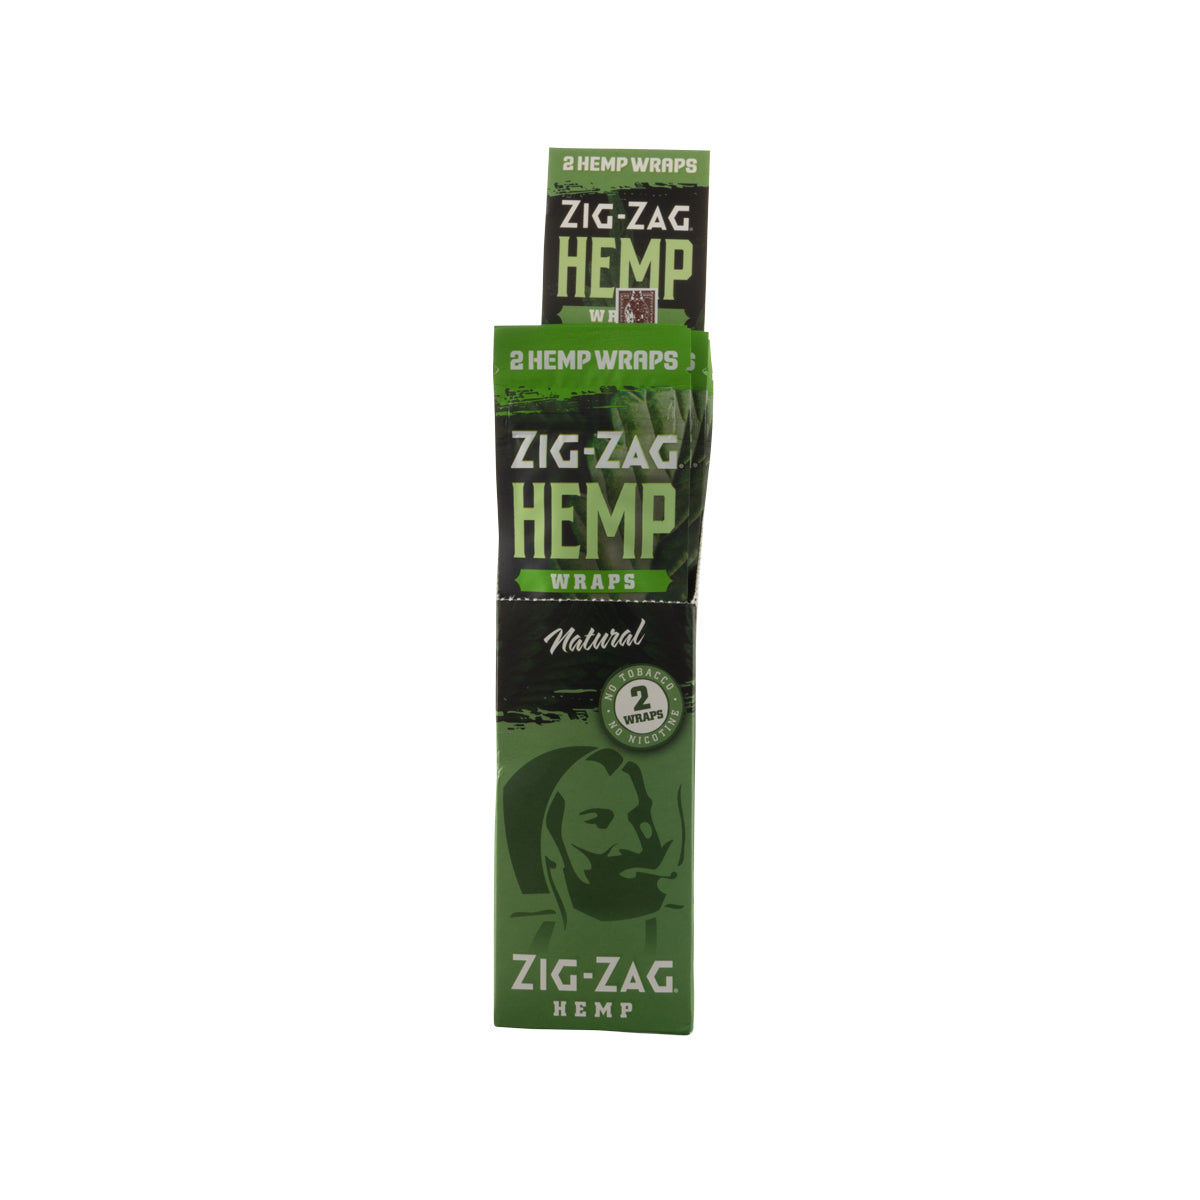 Zig Zag Hemp Wraps - Natural - 25 Pack Box